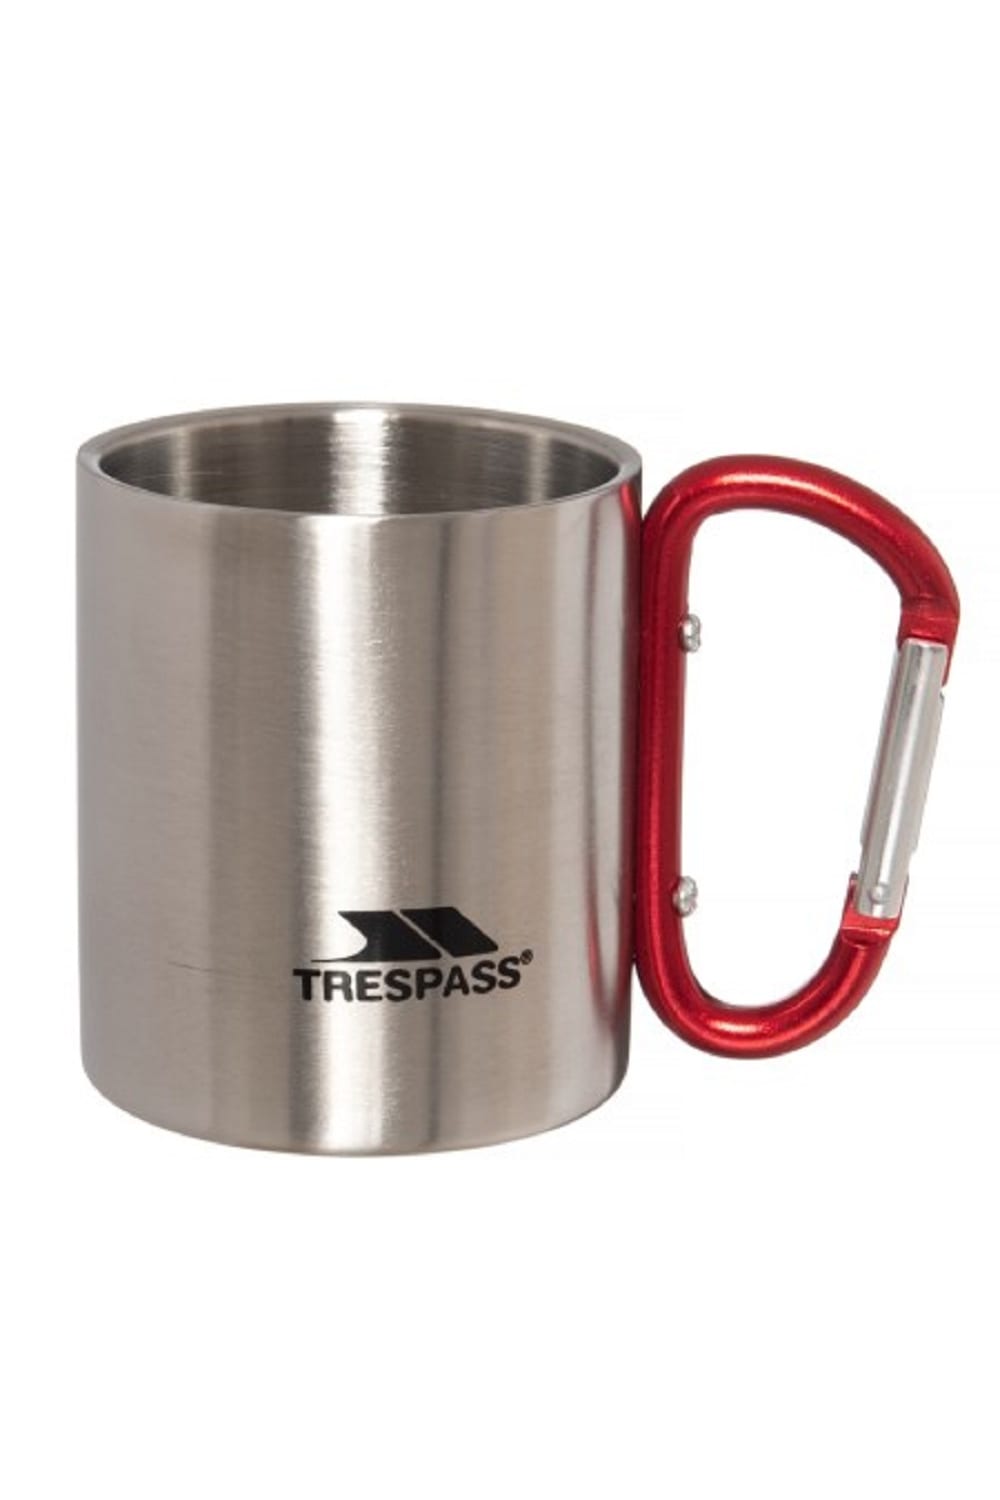 Trespass Bruski Carabiner Clip Travel Cup/Mug (Silver) (One Size)